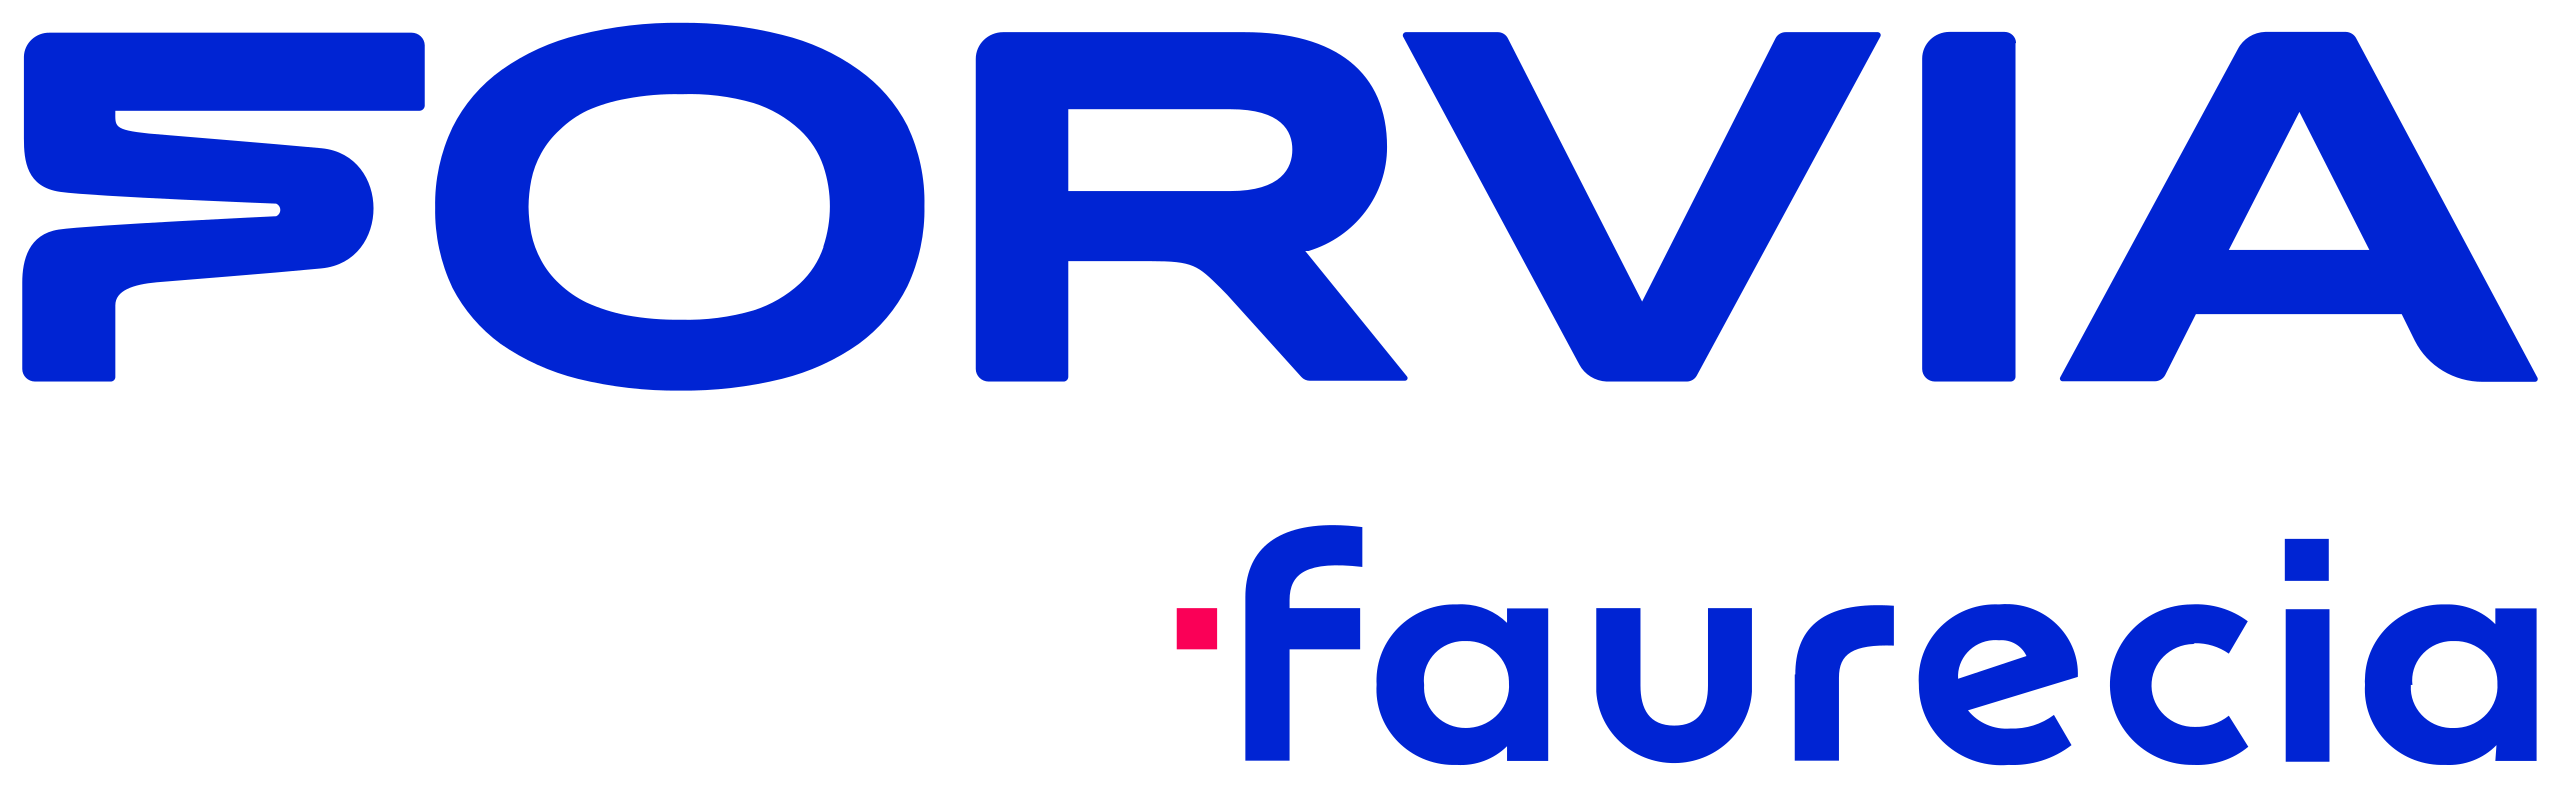 Faurecia Brand Logo